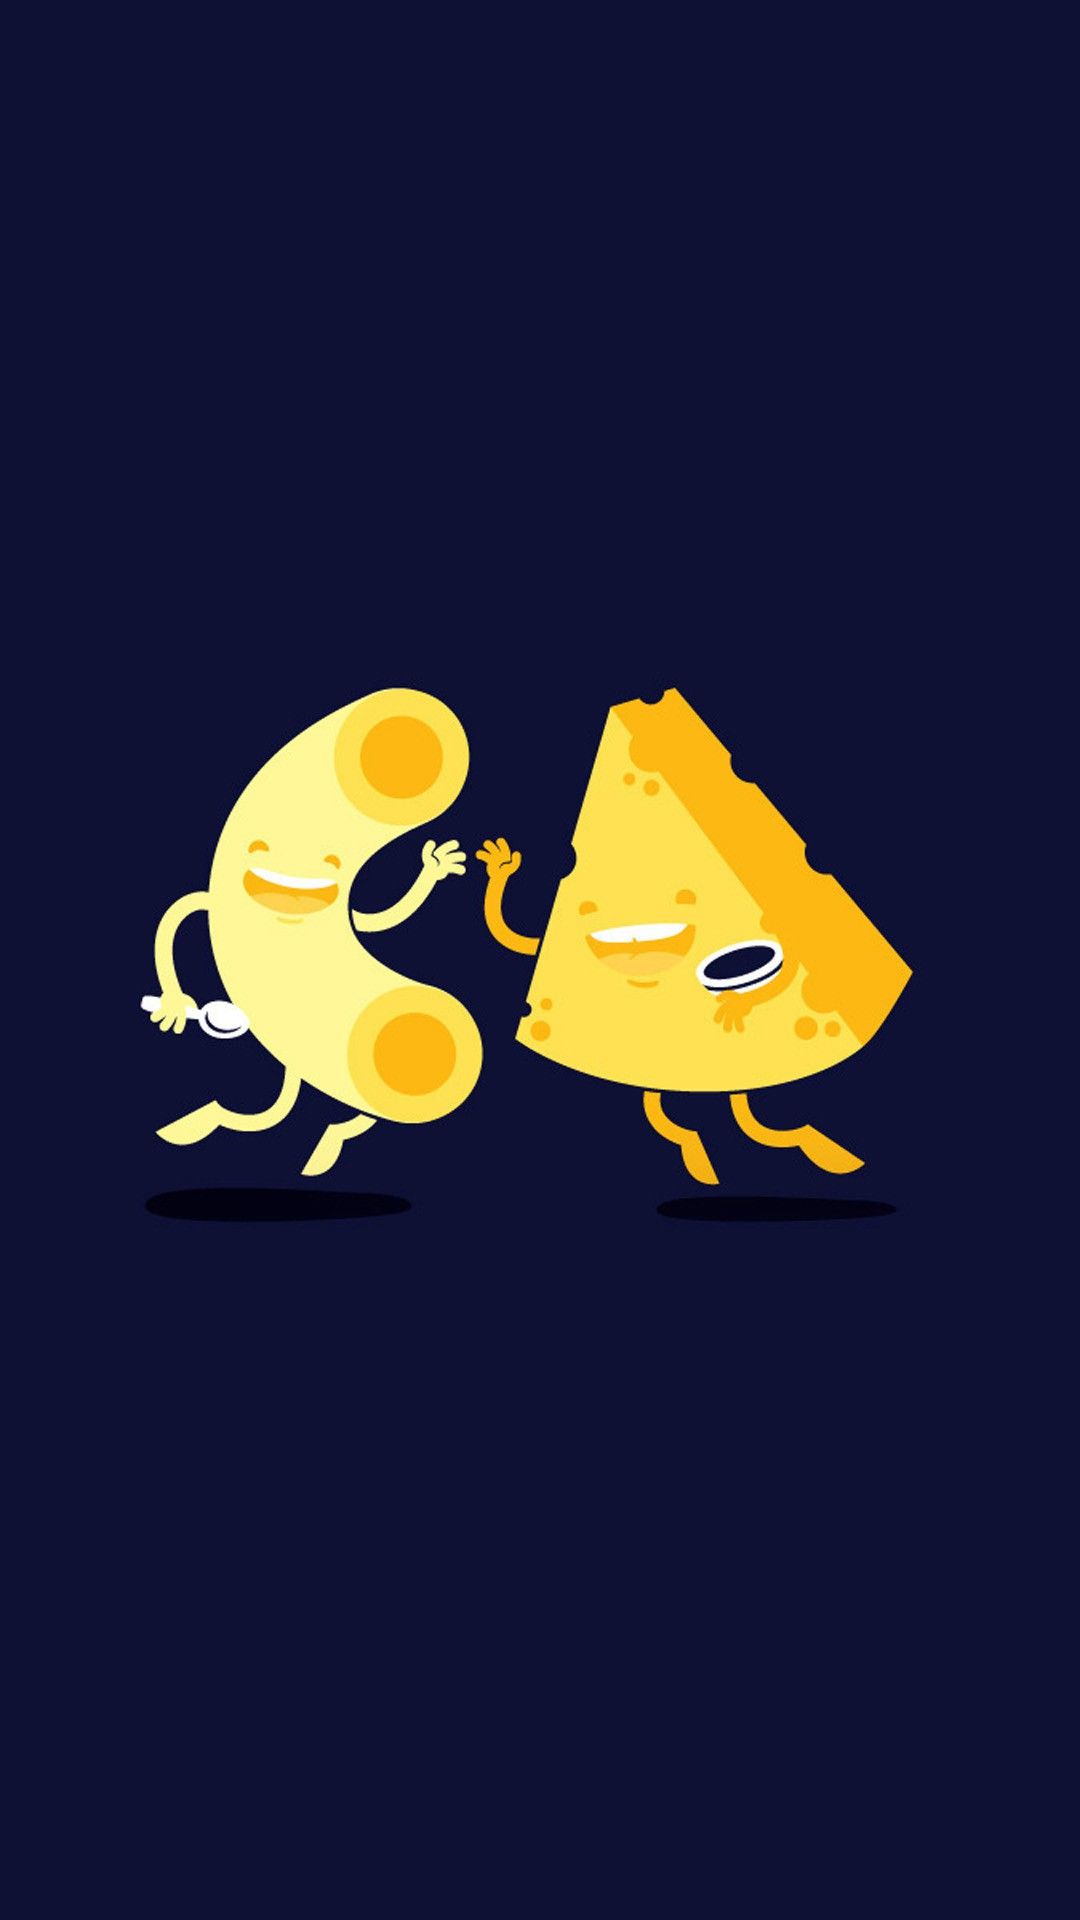 Cheese And Macaroni Cartoon iPhone 7 Wallpaper Love You